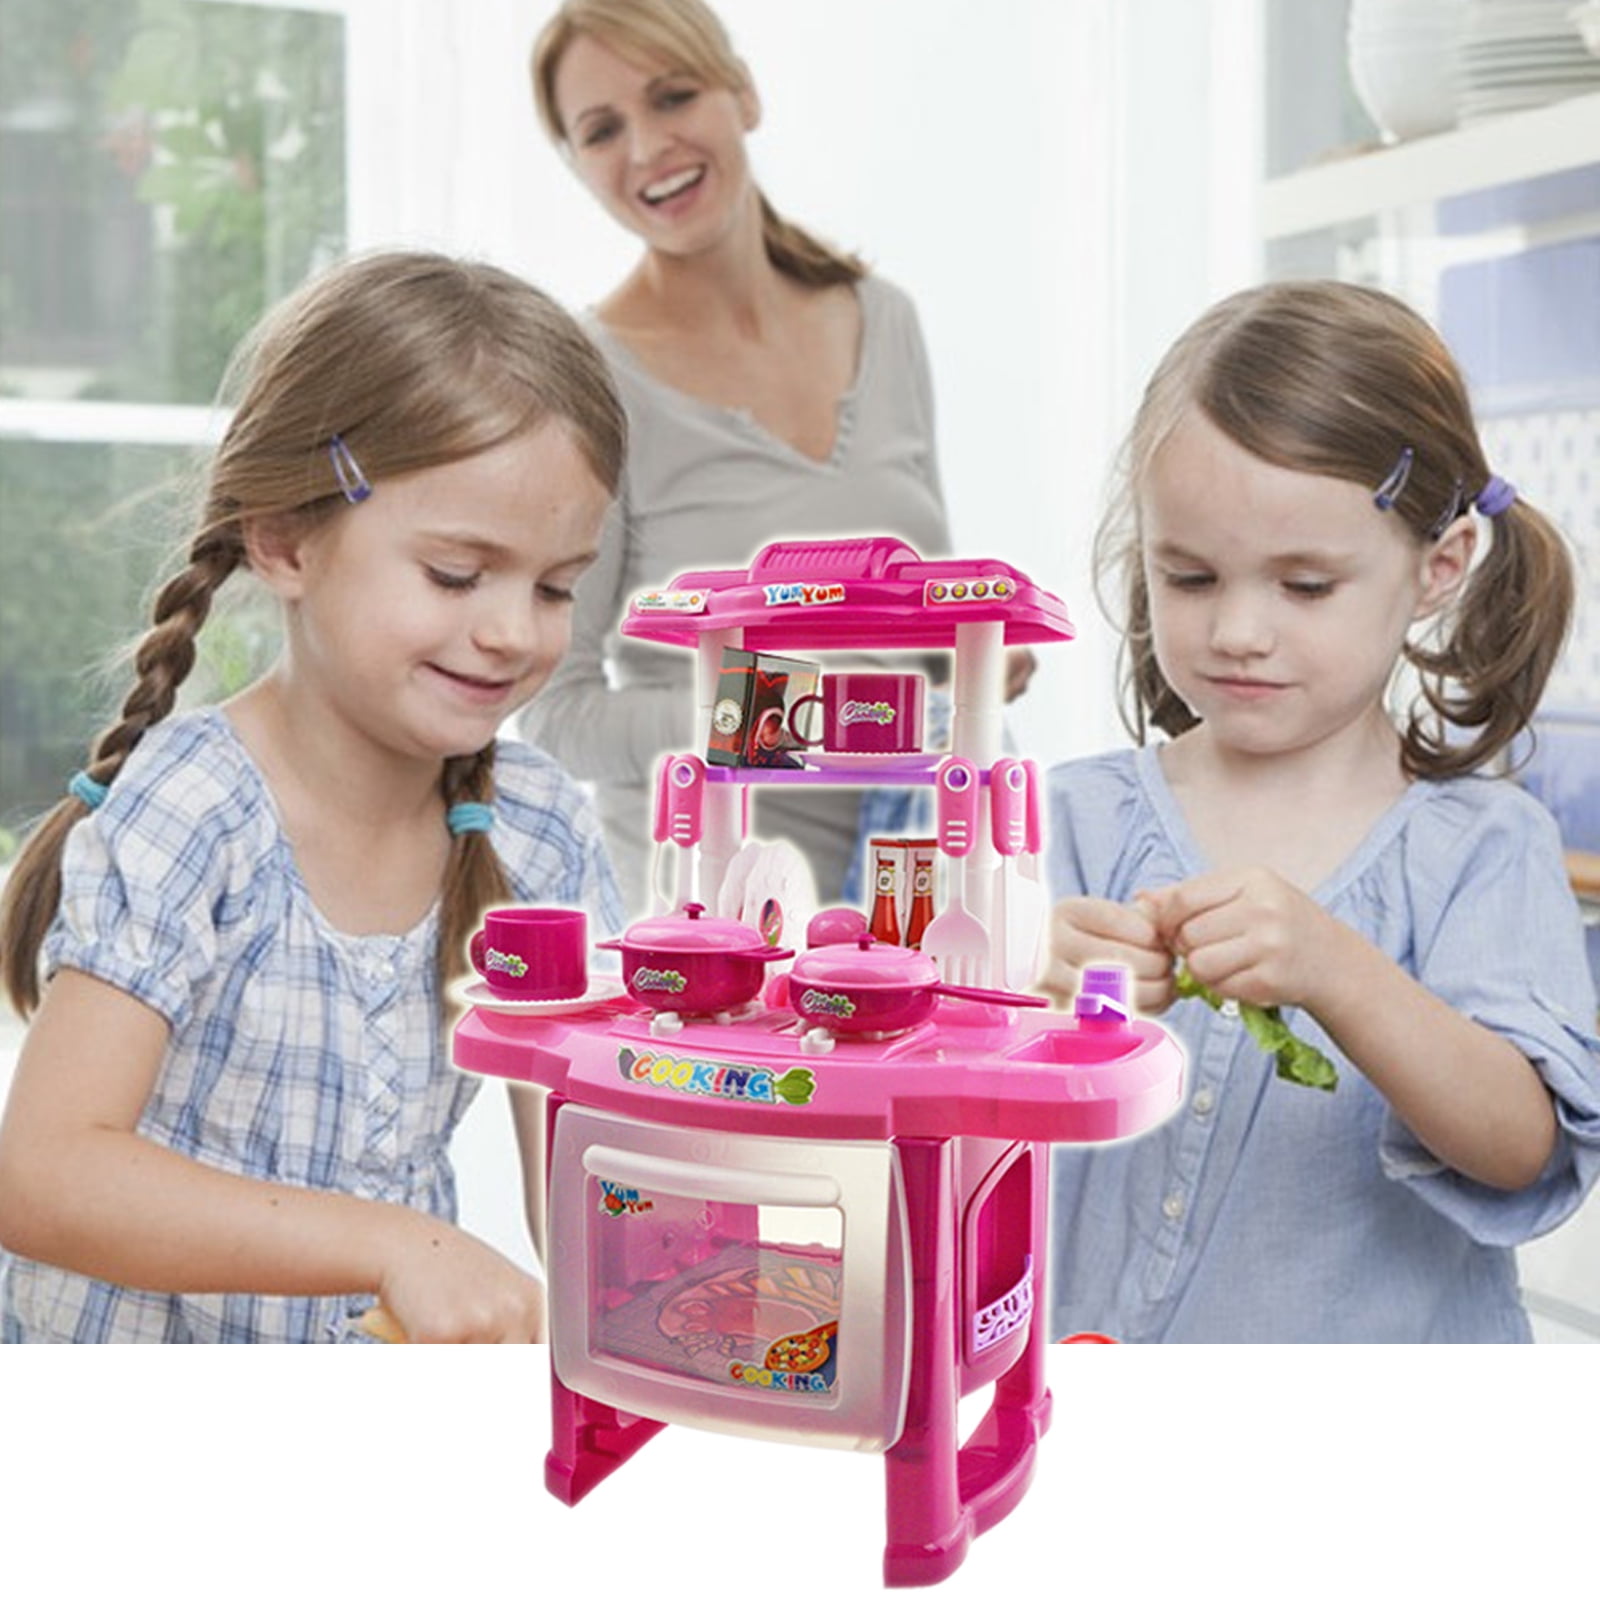 Kids Children Kitchen Pretend Play Toys Cooking Cookware Set Pink 11pcs 